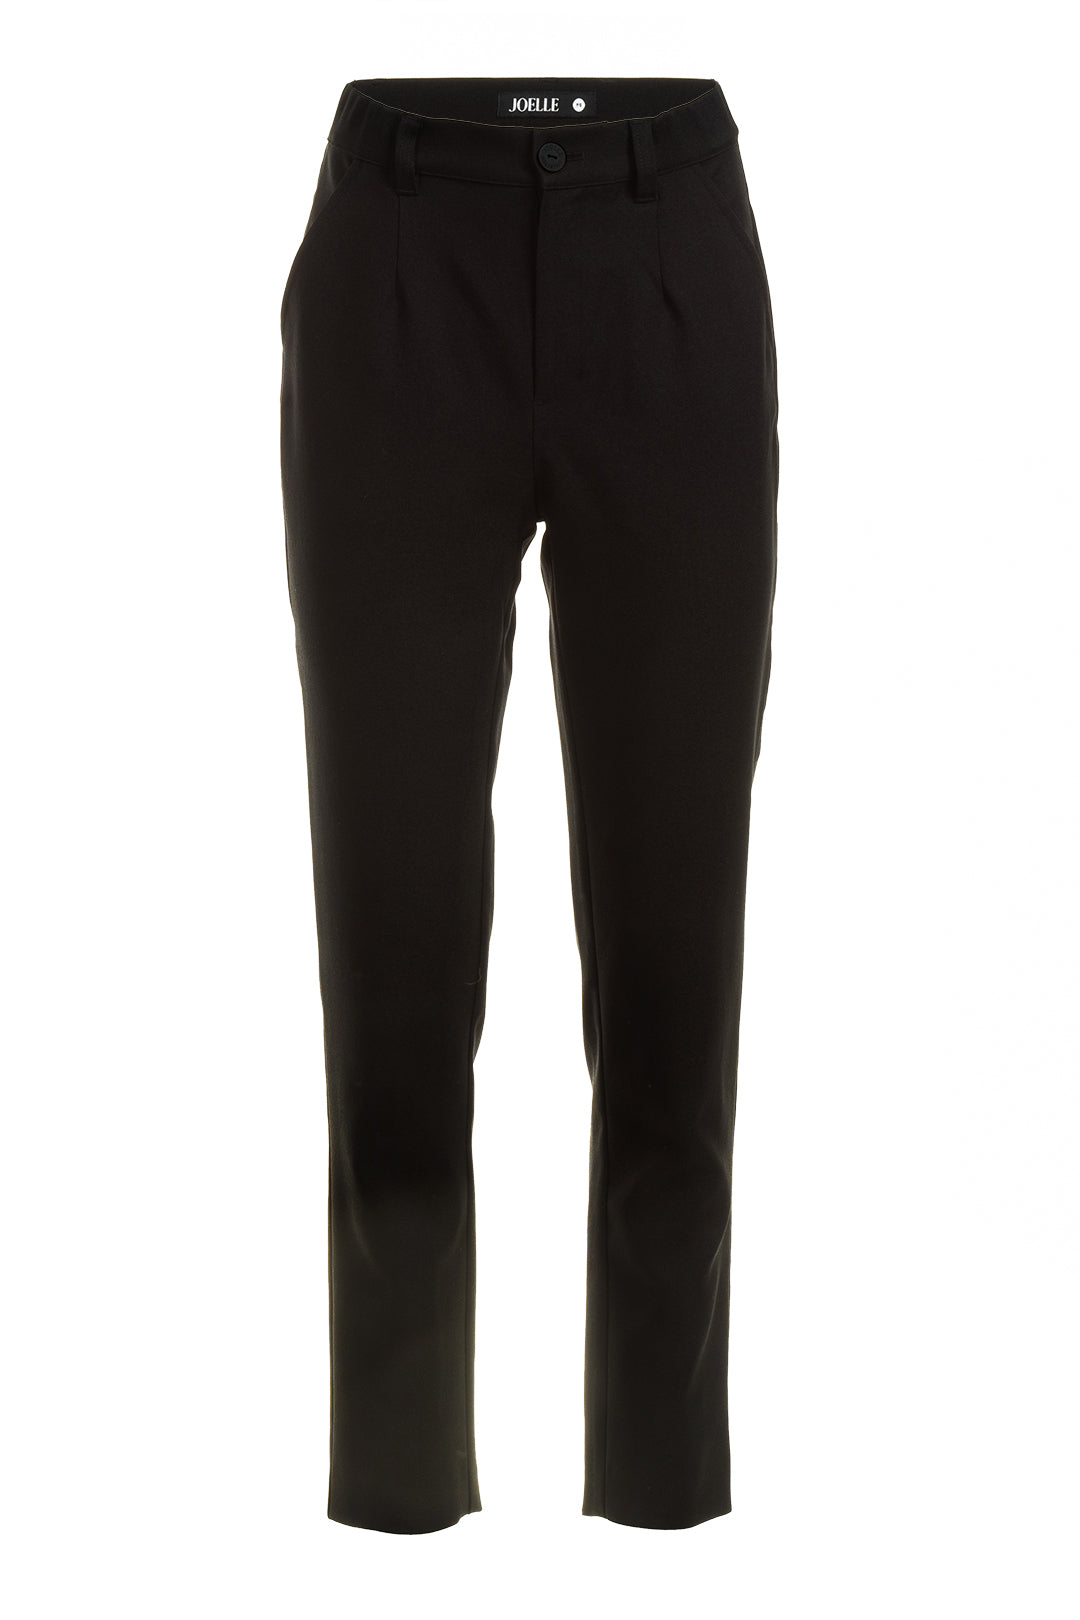 Black tailored pants | France